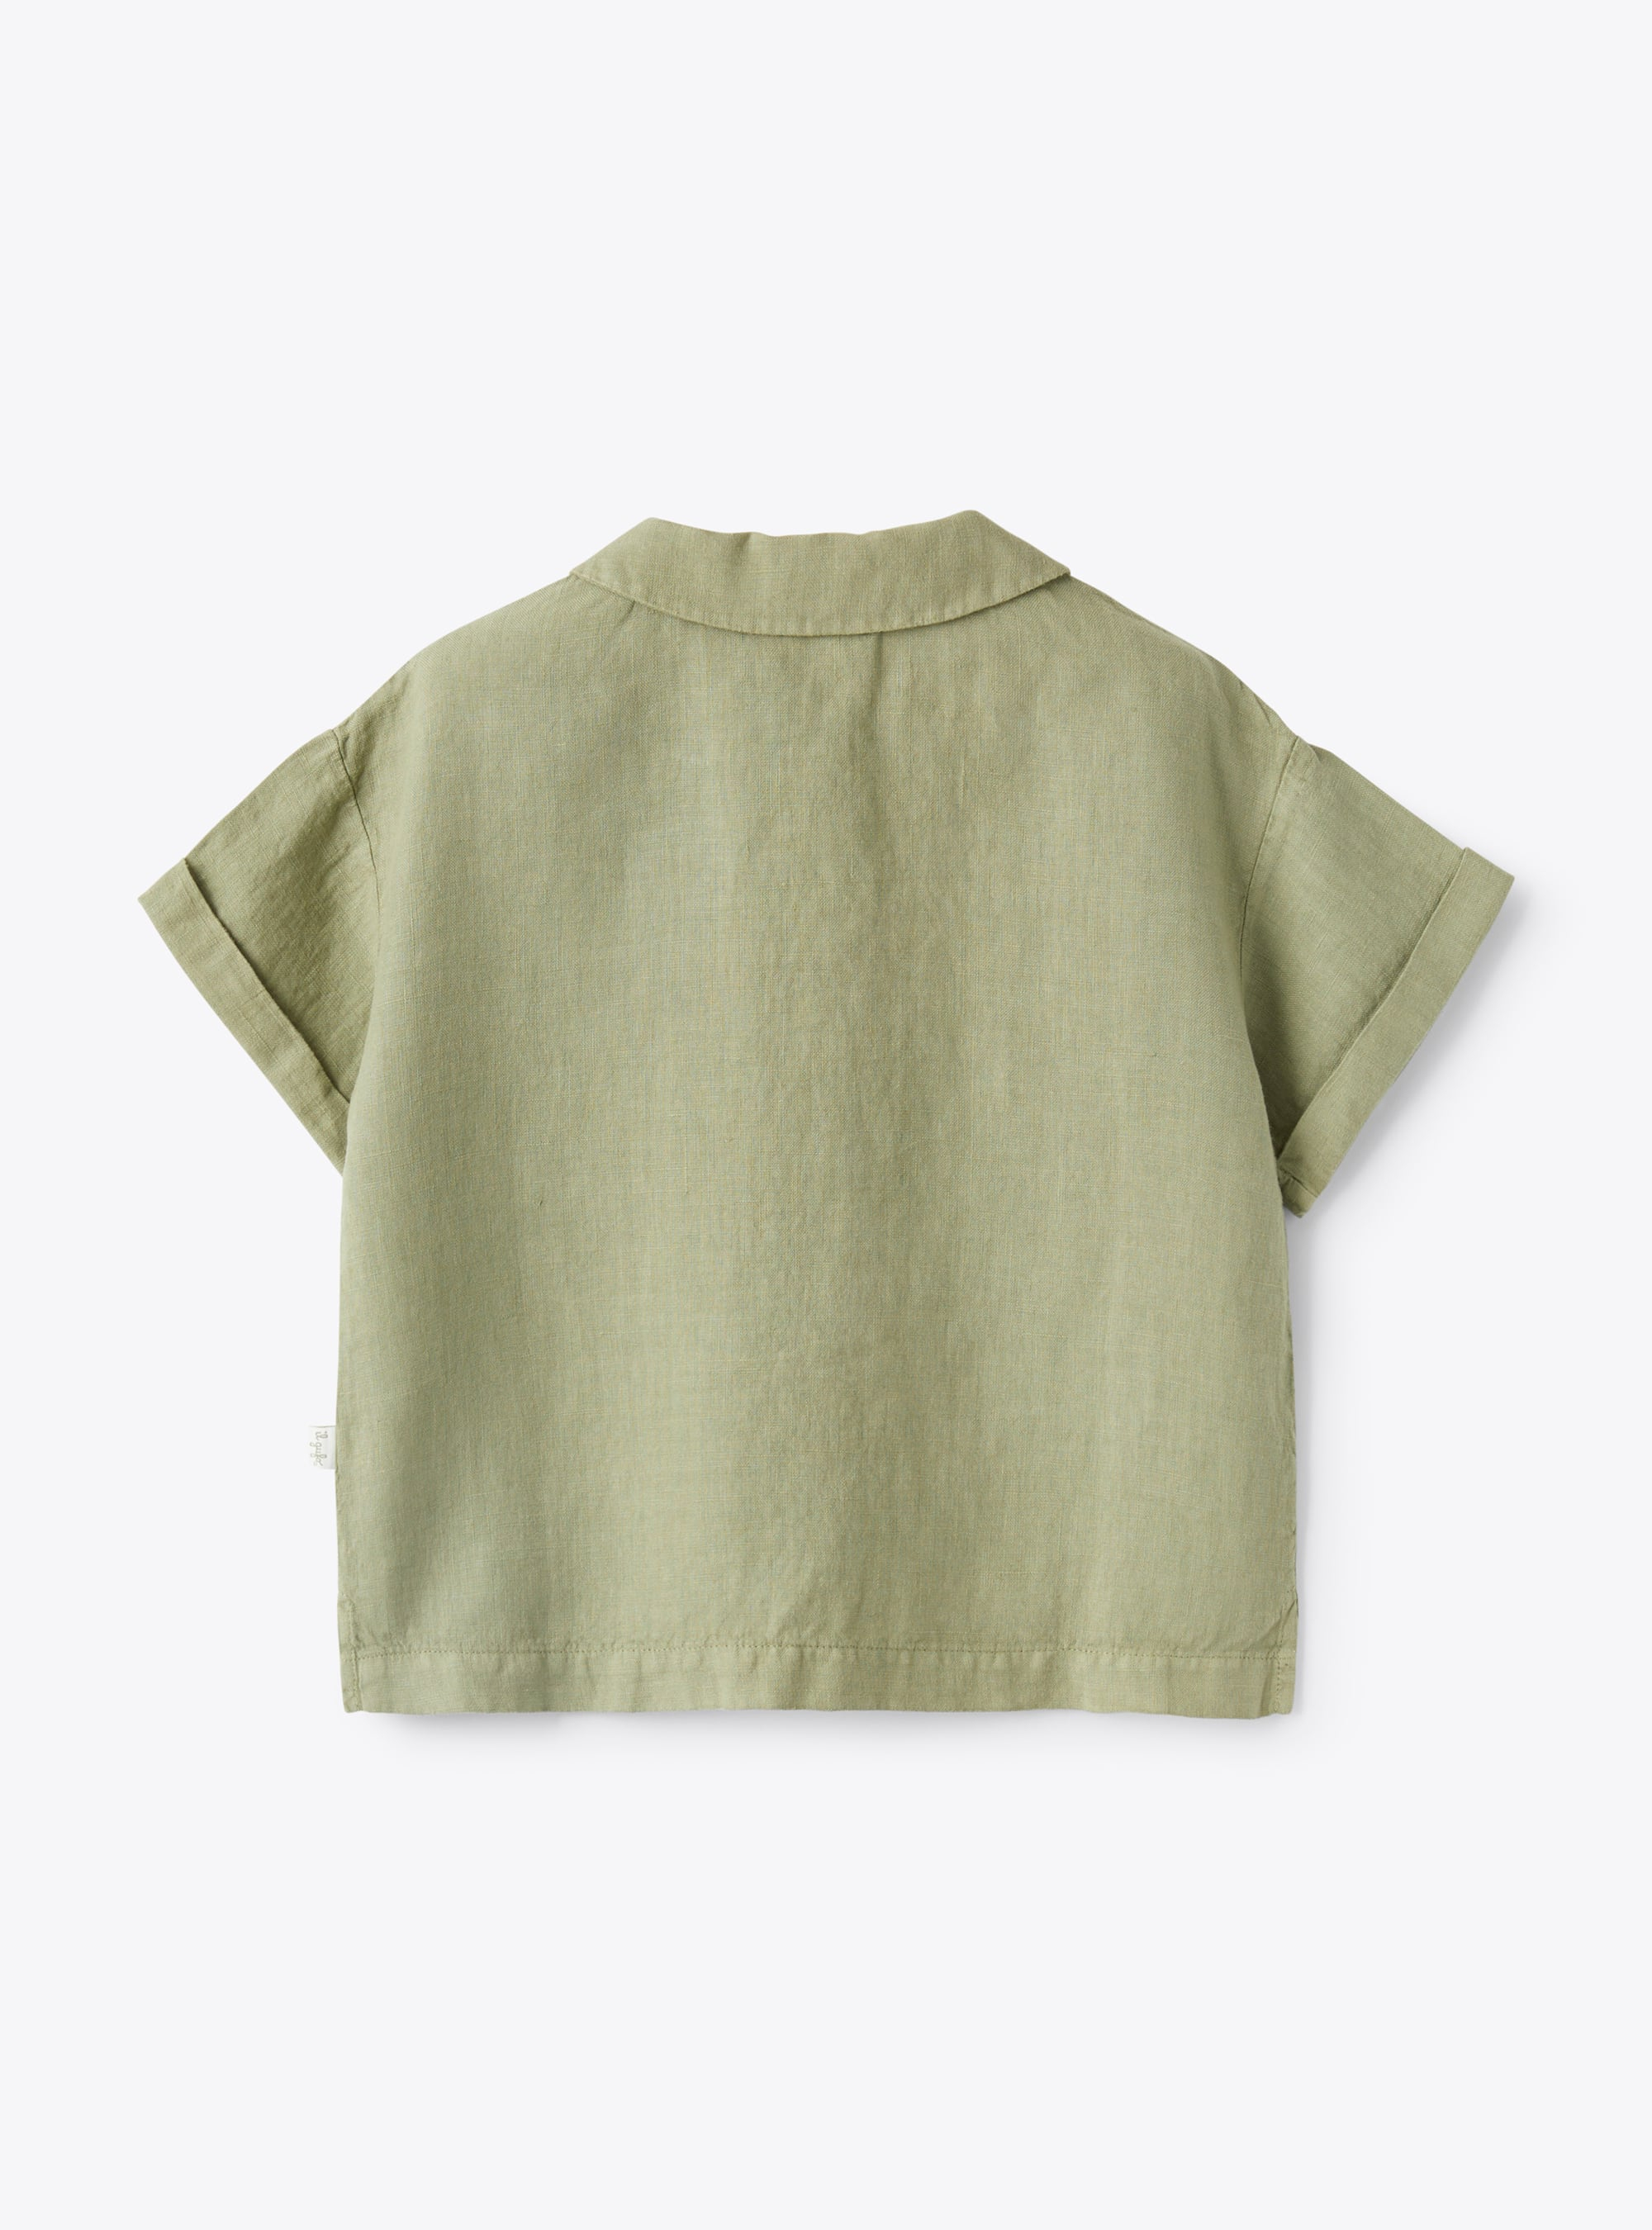 Shirt in sage-green garment-dyed linen - Green | Il Gufo